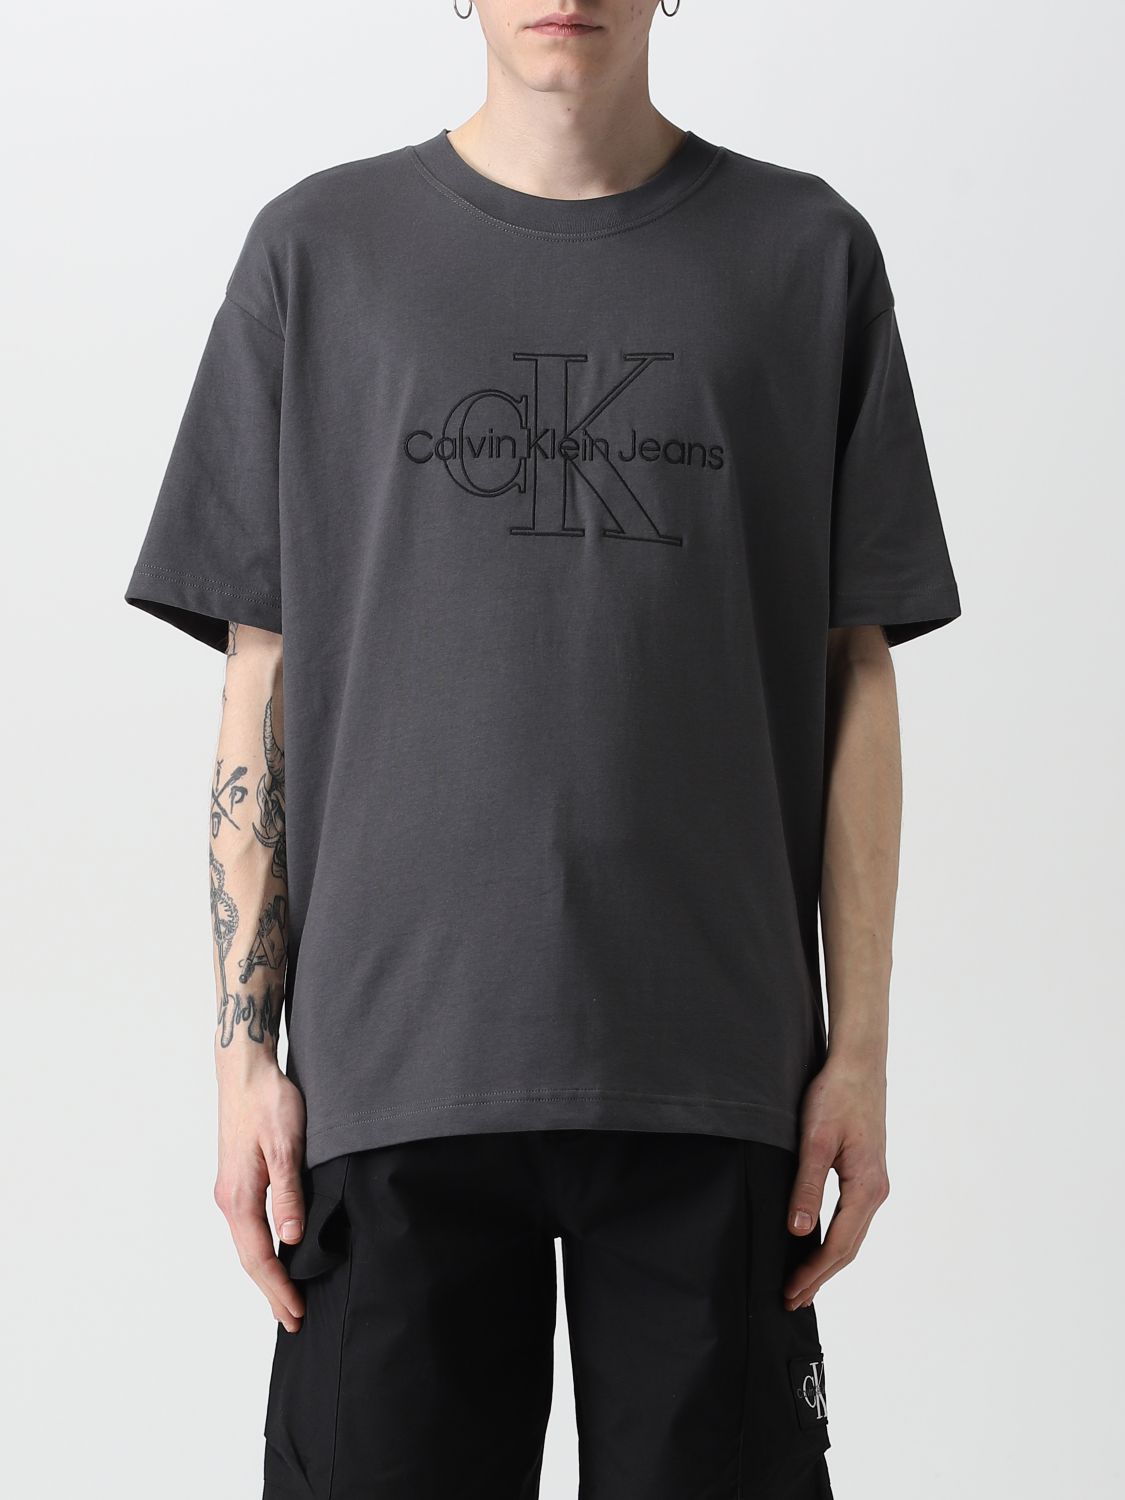 CALVIN KLEIN JEANS: t-shirt for man - Black | Calvin Klein Jeans t-shirt  J30J323305 online on 